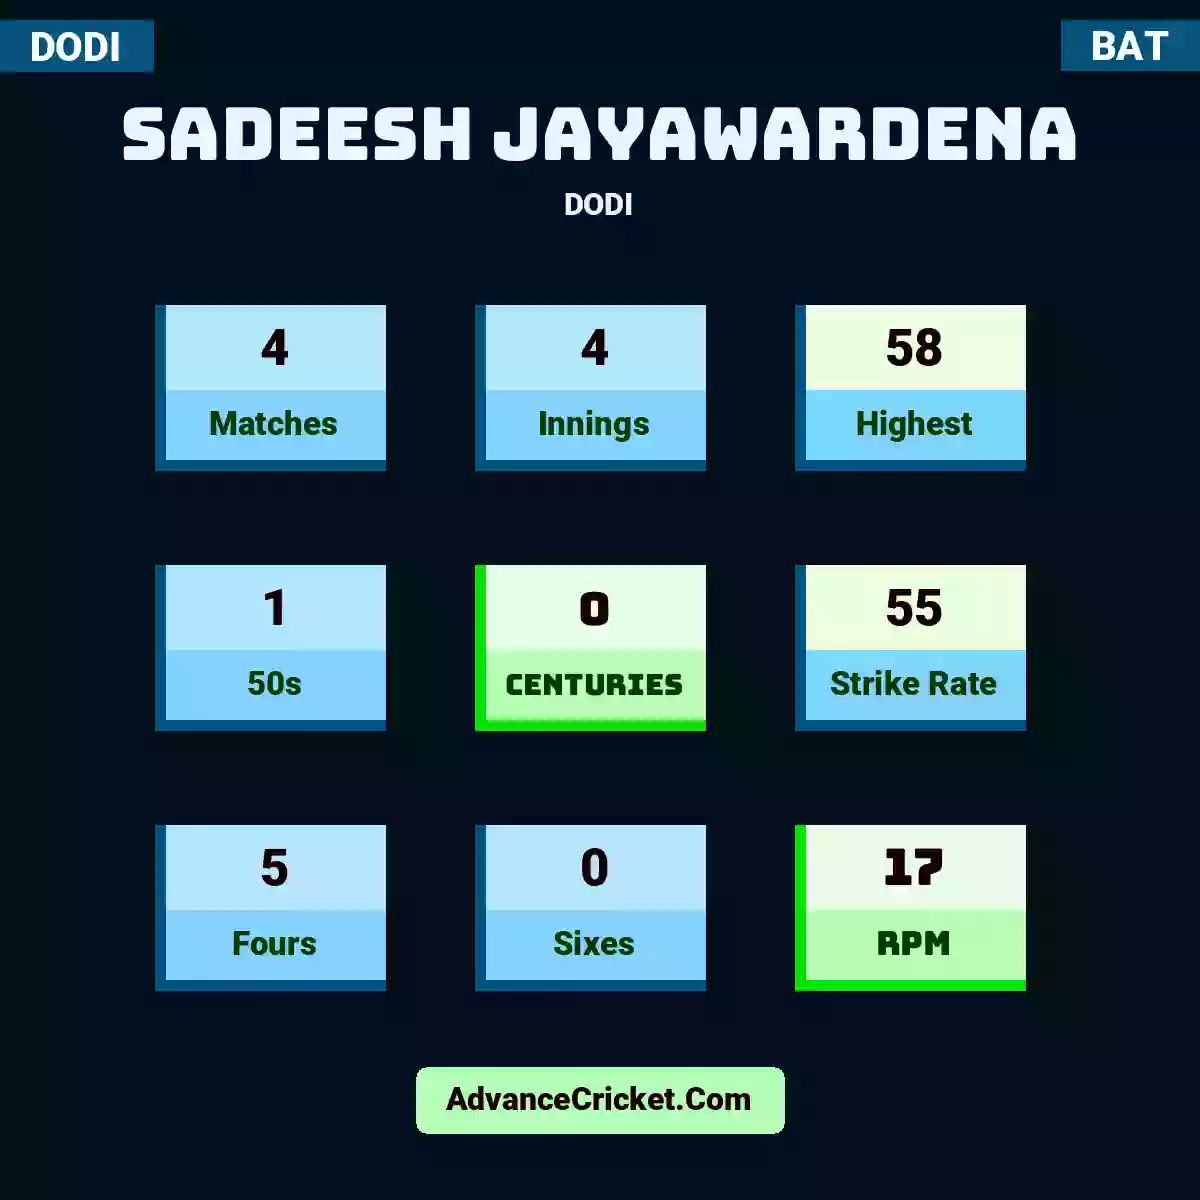 Sadeesh Jayawardena DODI , Sadeesh Jayawardena played 4 matches, scored 58 runs as highest, 1 half-centuries, and 0 centuries, with a strike rate of 55. S.Jayawardena hit 5 fours and 0 sixes, with an RPM of 17.